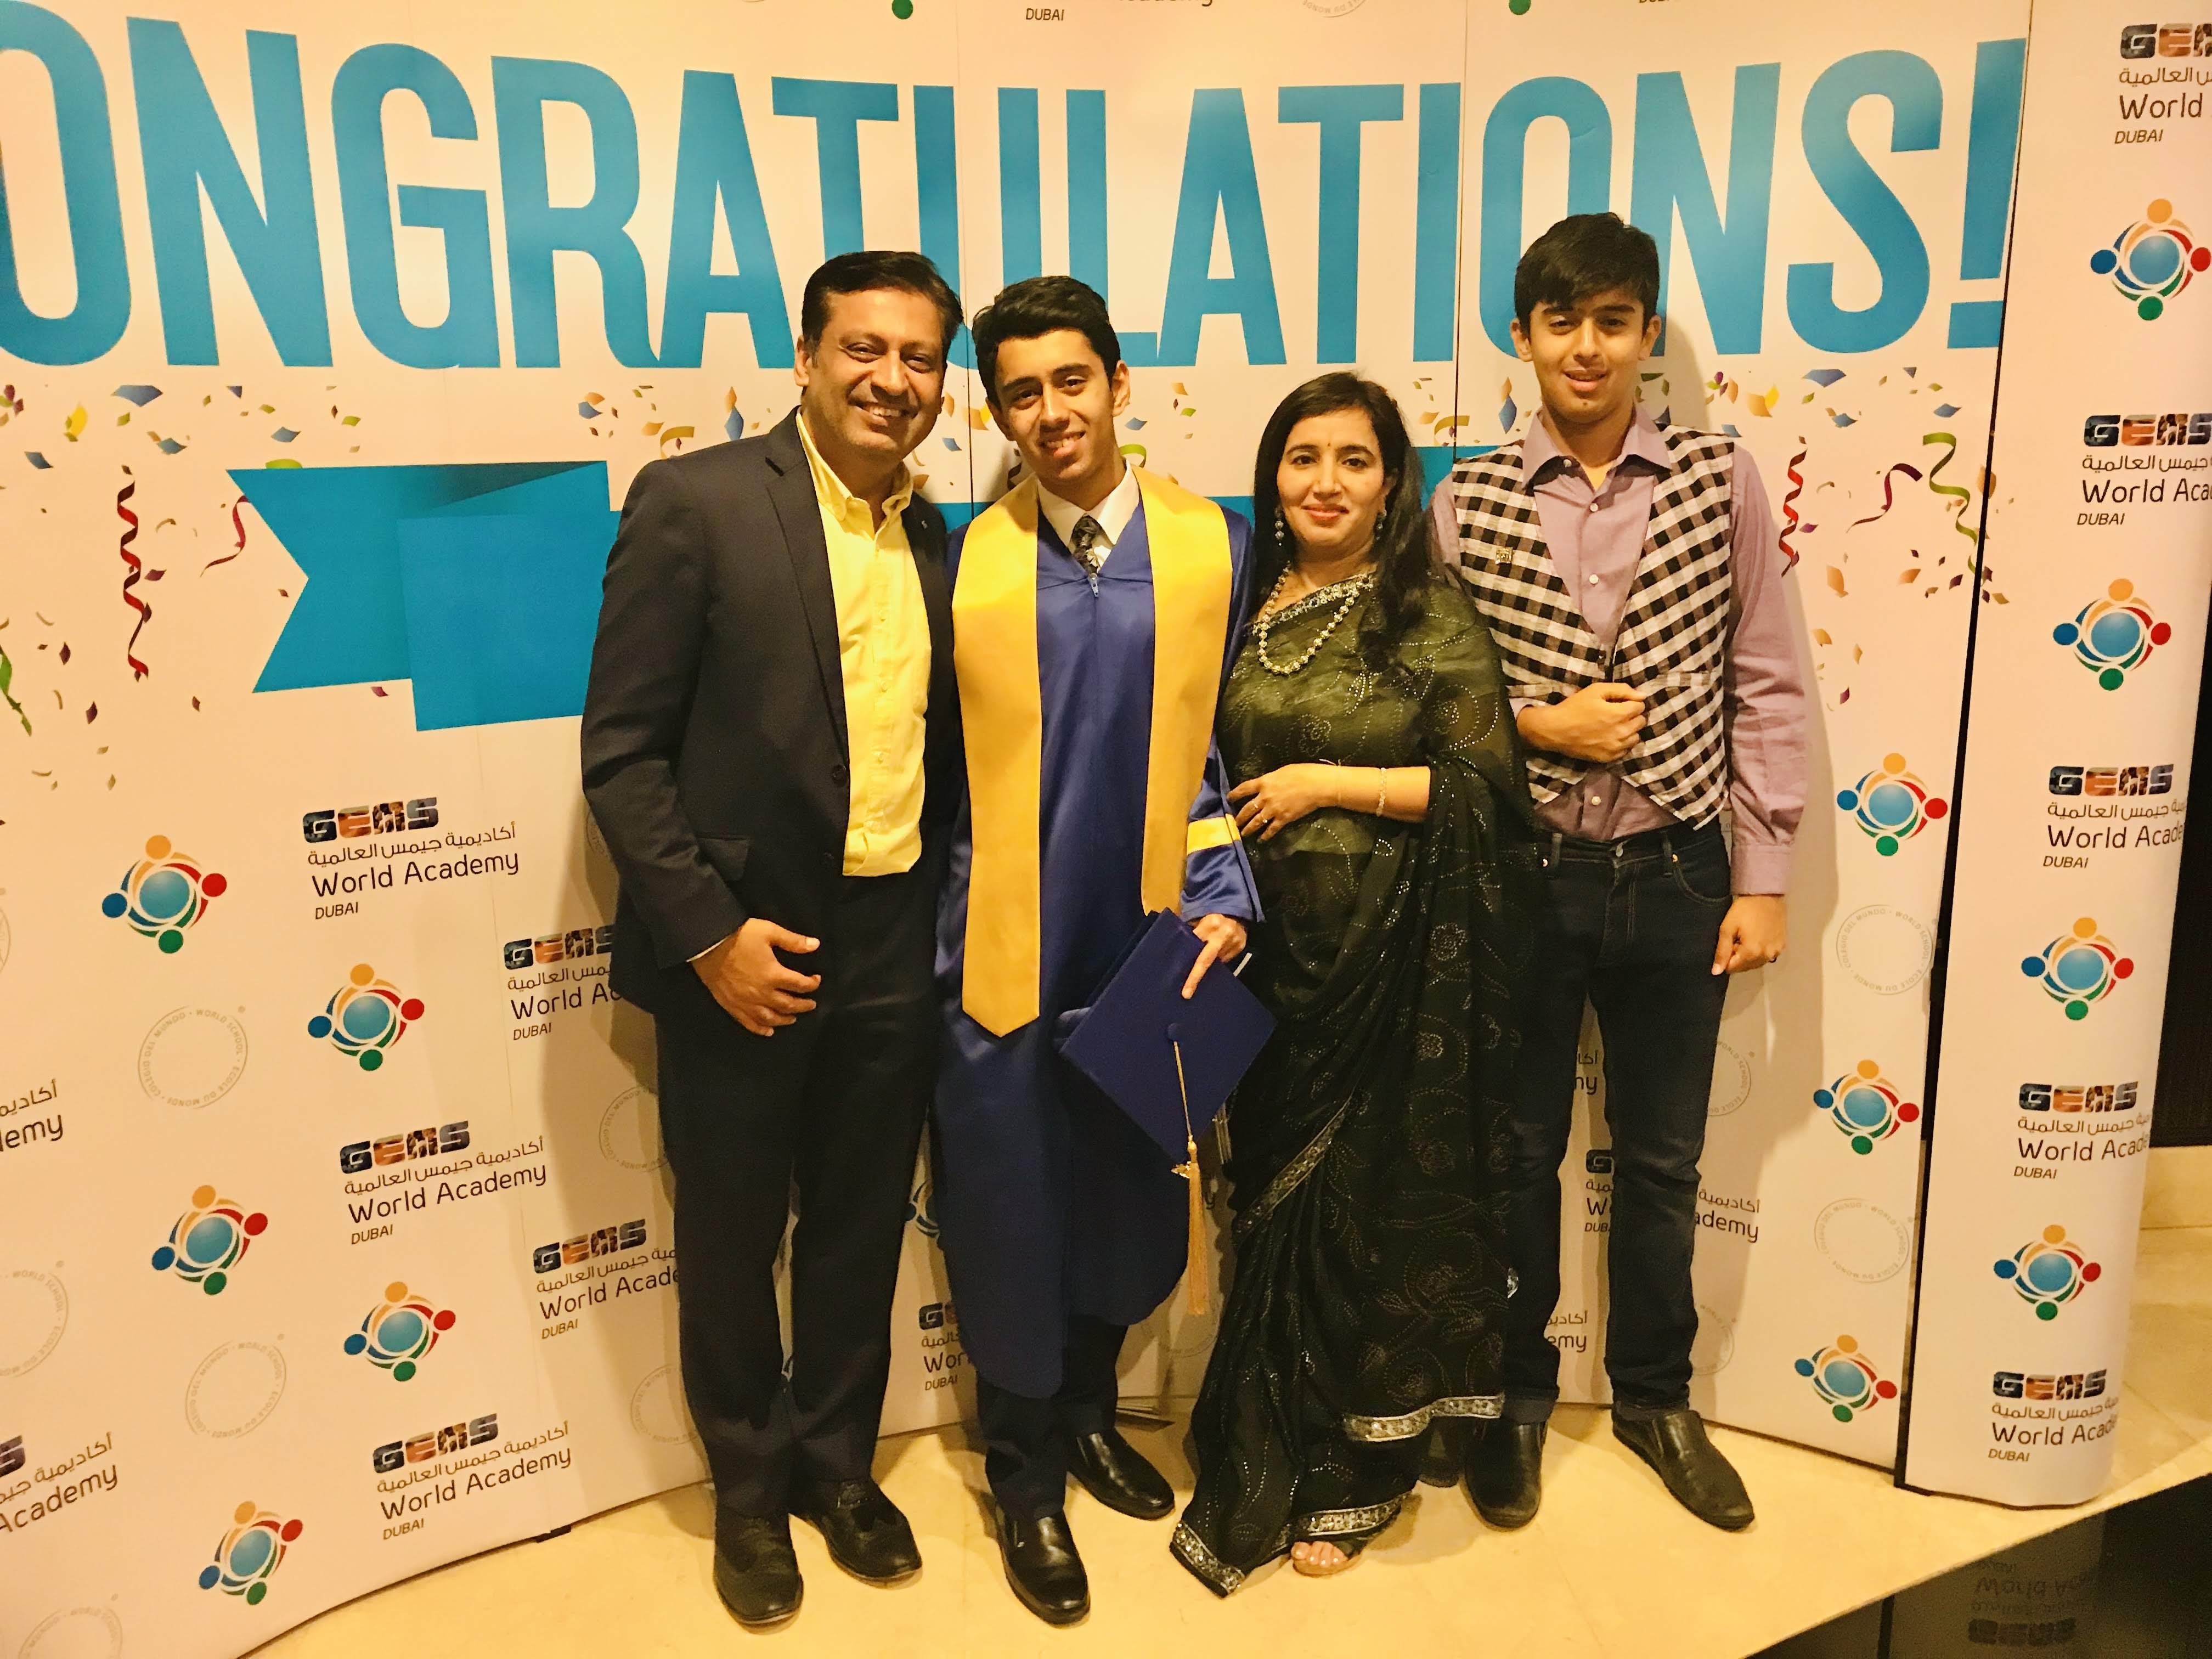 Avik and Ishir with their parents at Avik's graduation